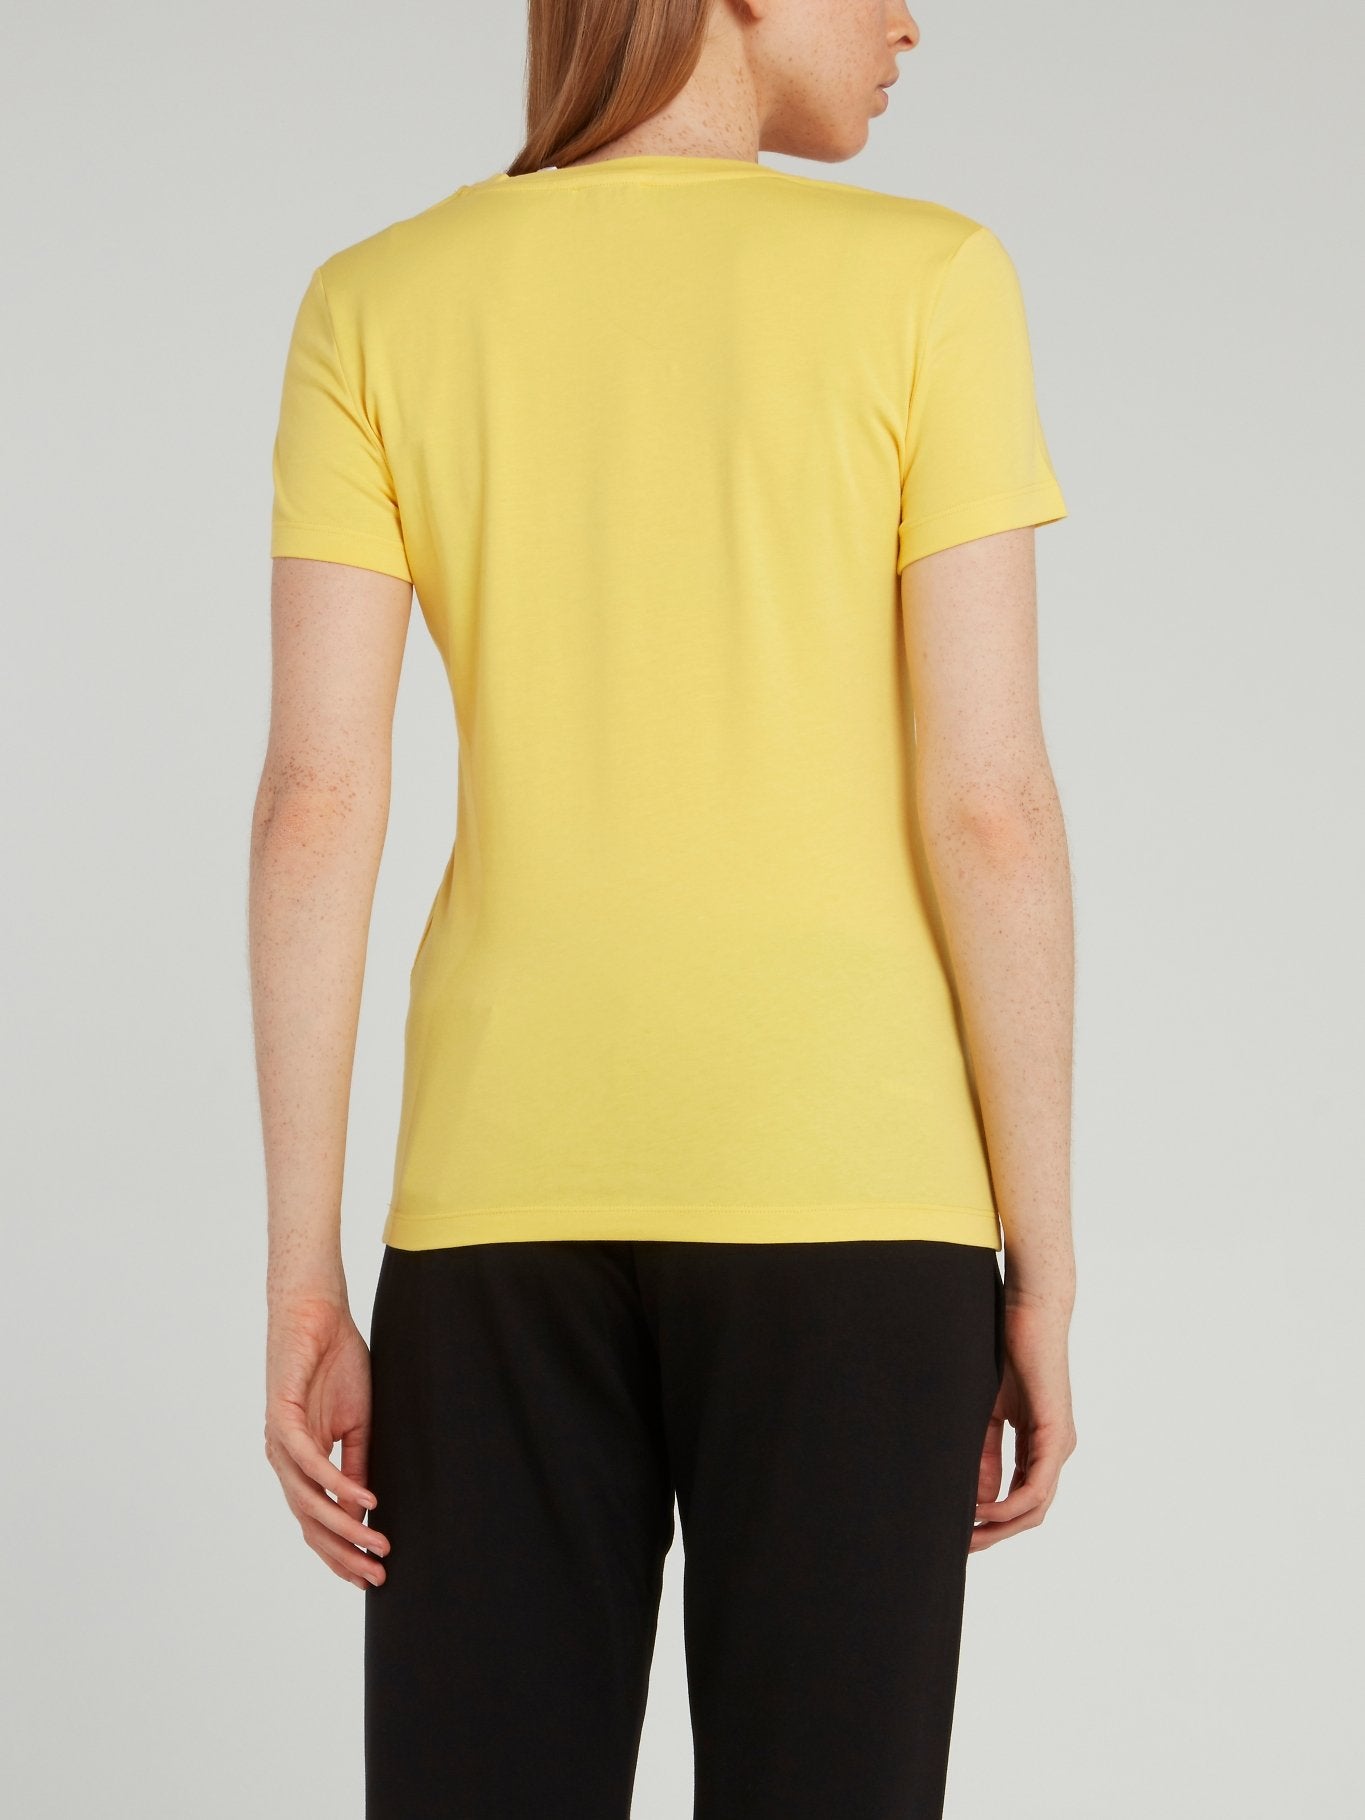 Yellow Portrait Print T-Shirt